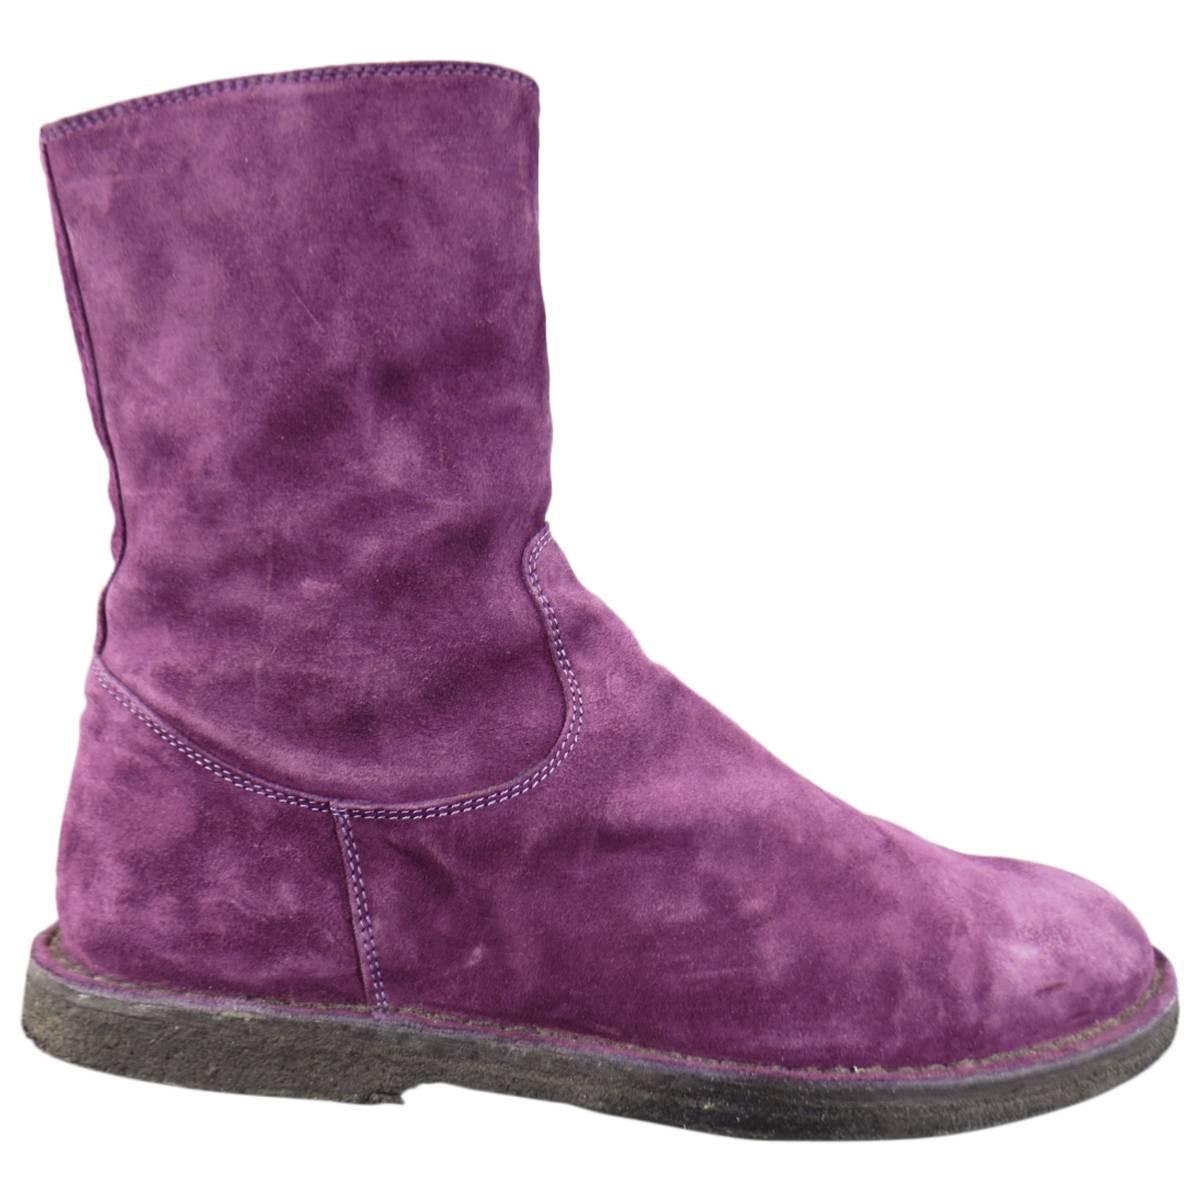 ANN DEMEULEMEESTER Size 8 Men's Purple Suede Crepe Sole Calf Boots